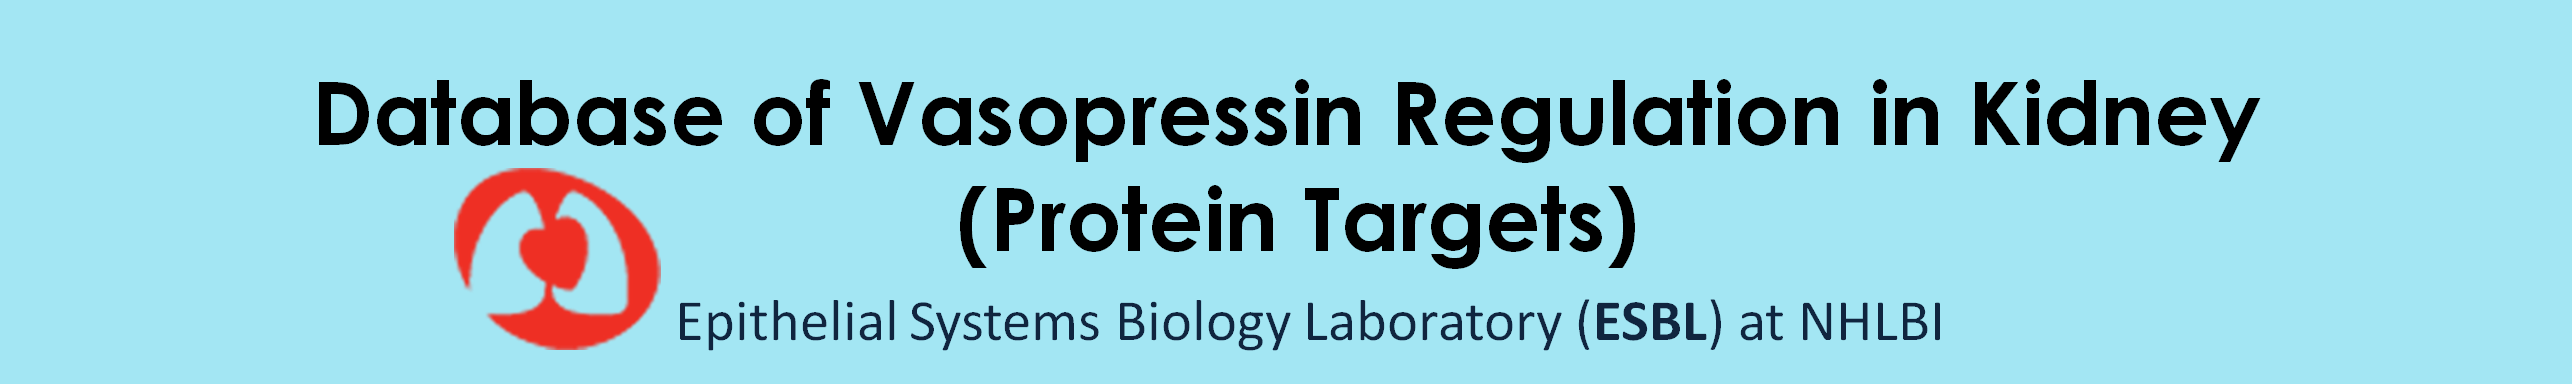 Database of Vasopressin Regulation in Kidney (Protein Targets)